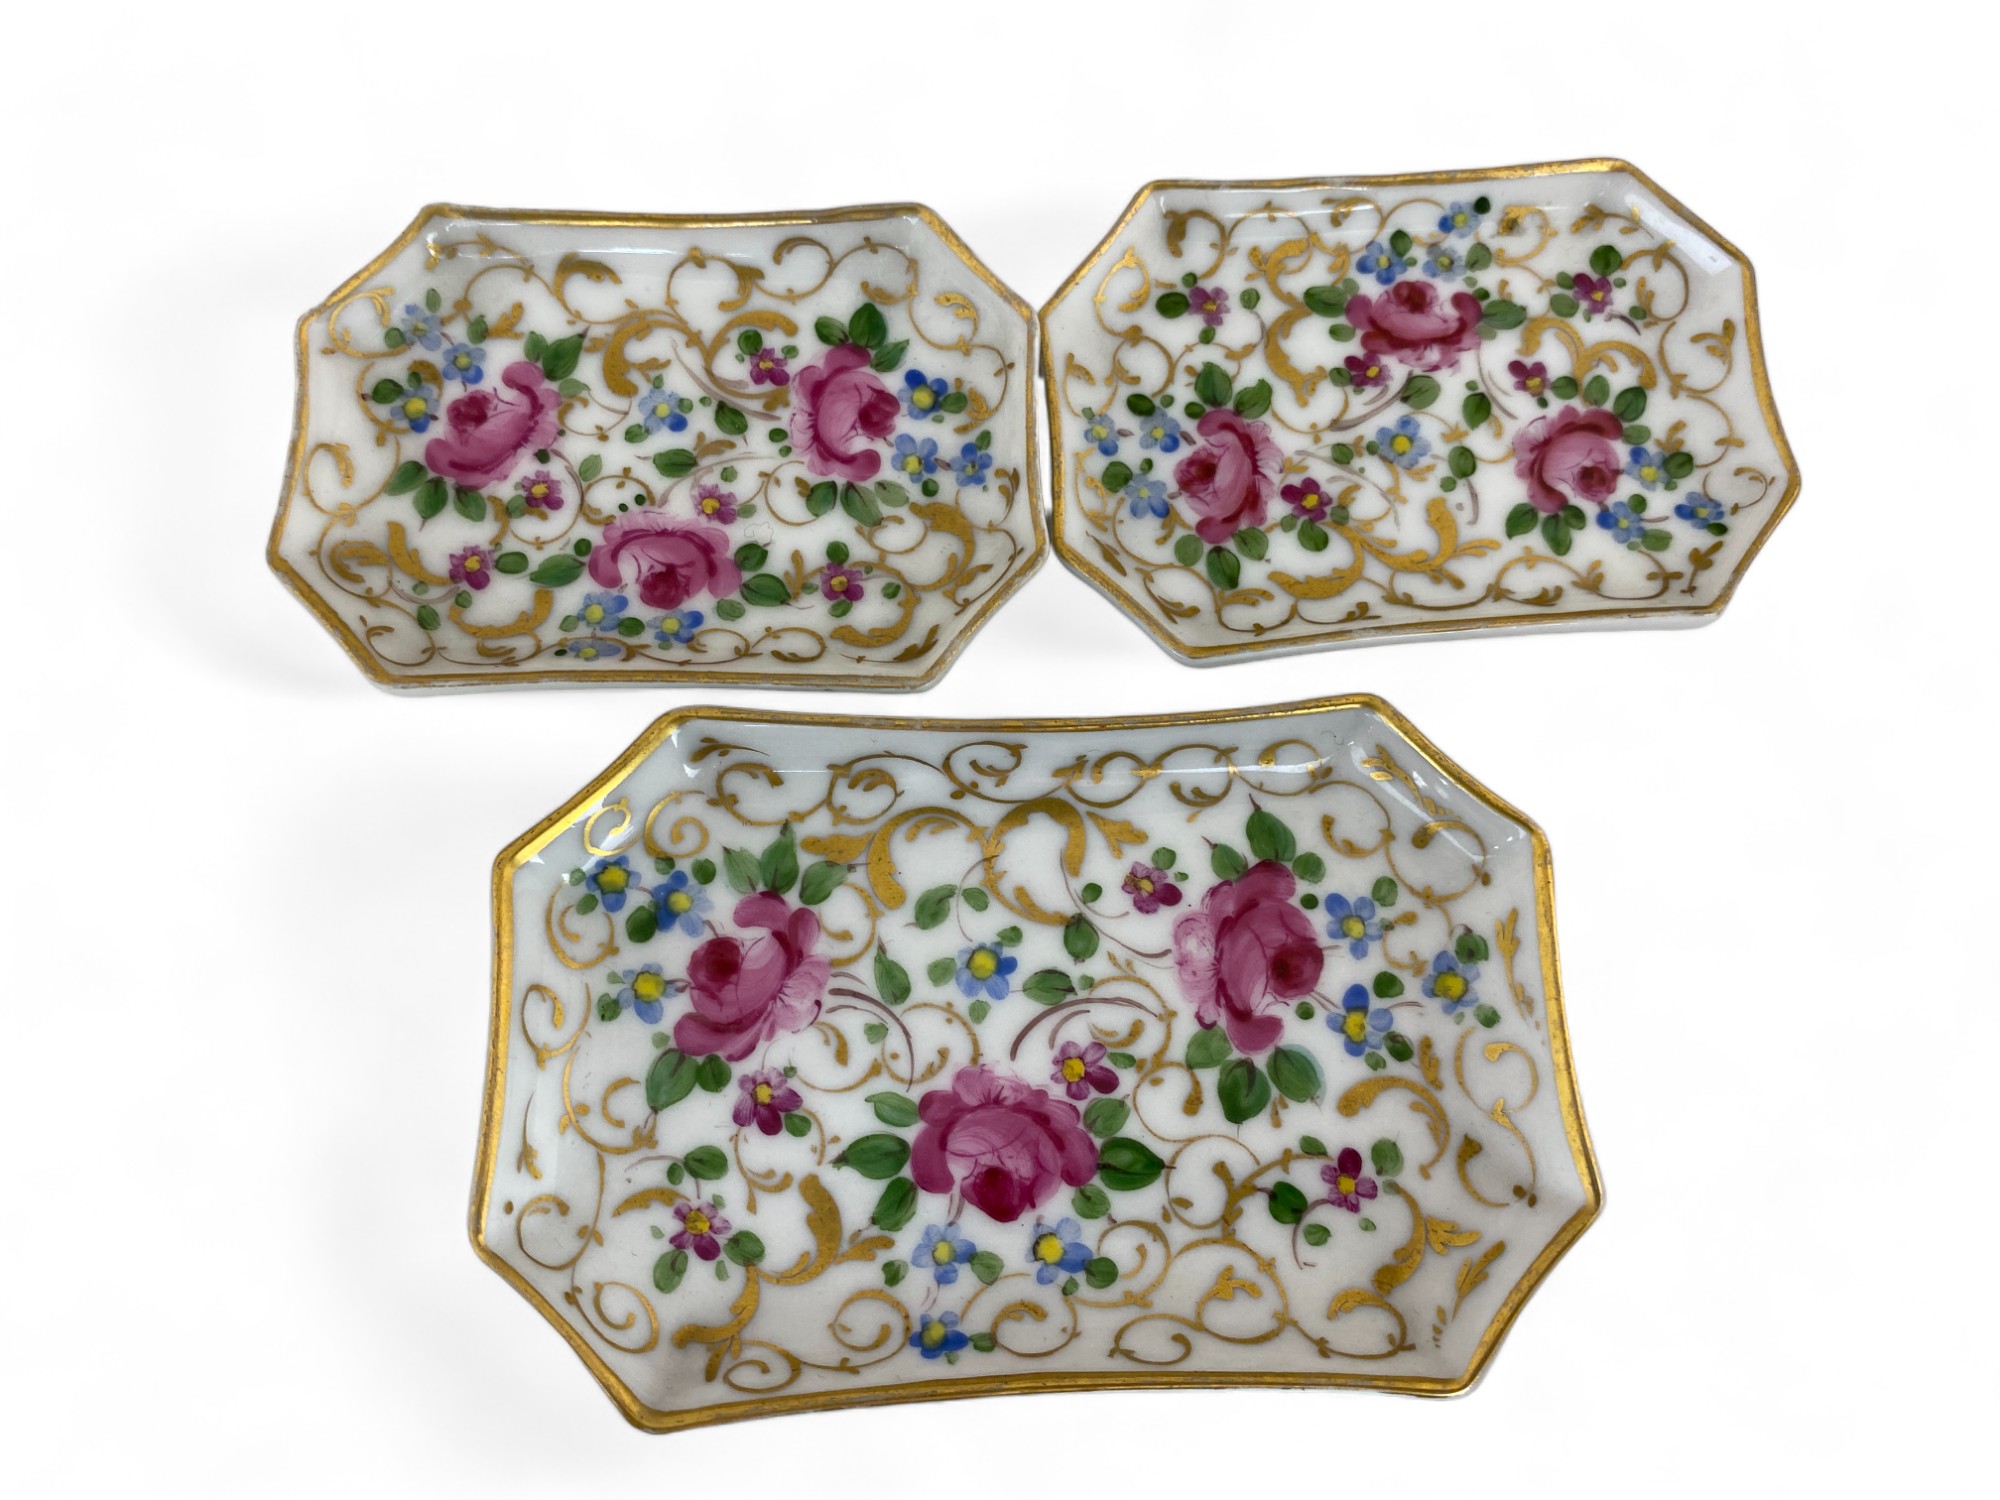 A quantity of decorative ceramics including a small quantity of small boxes - Image 9 of 22